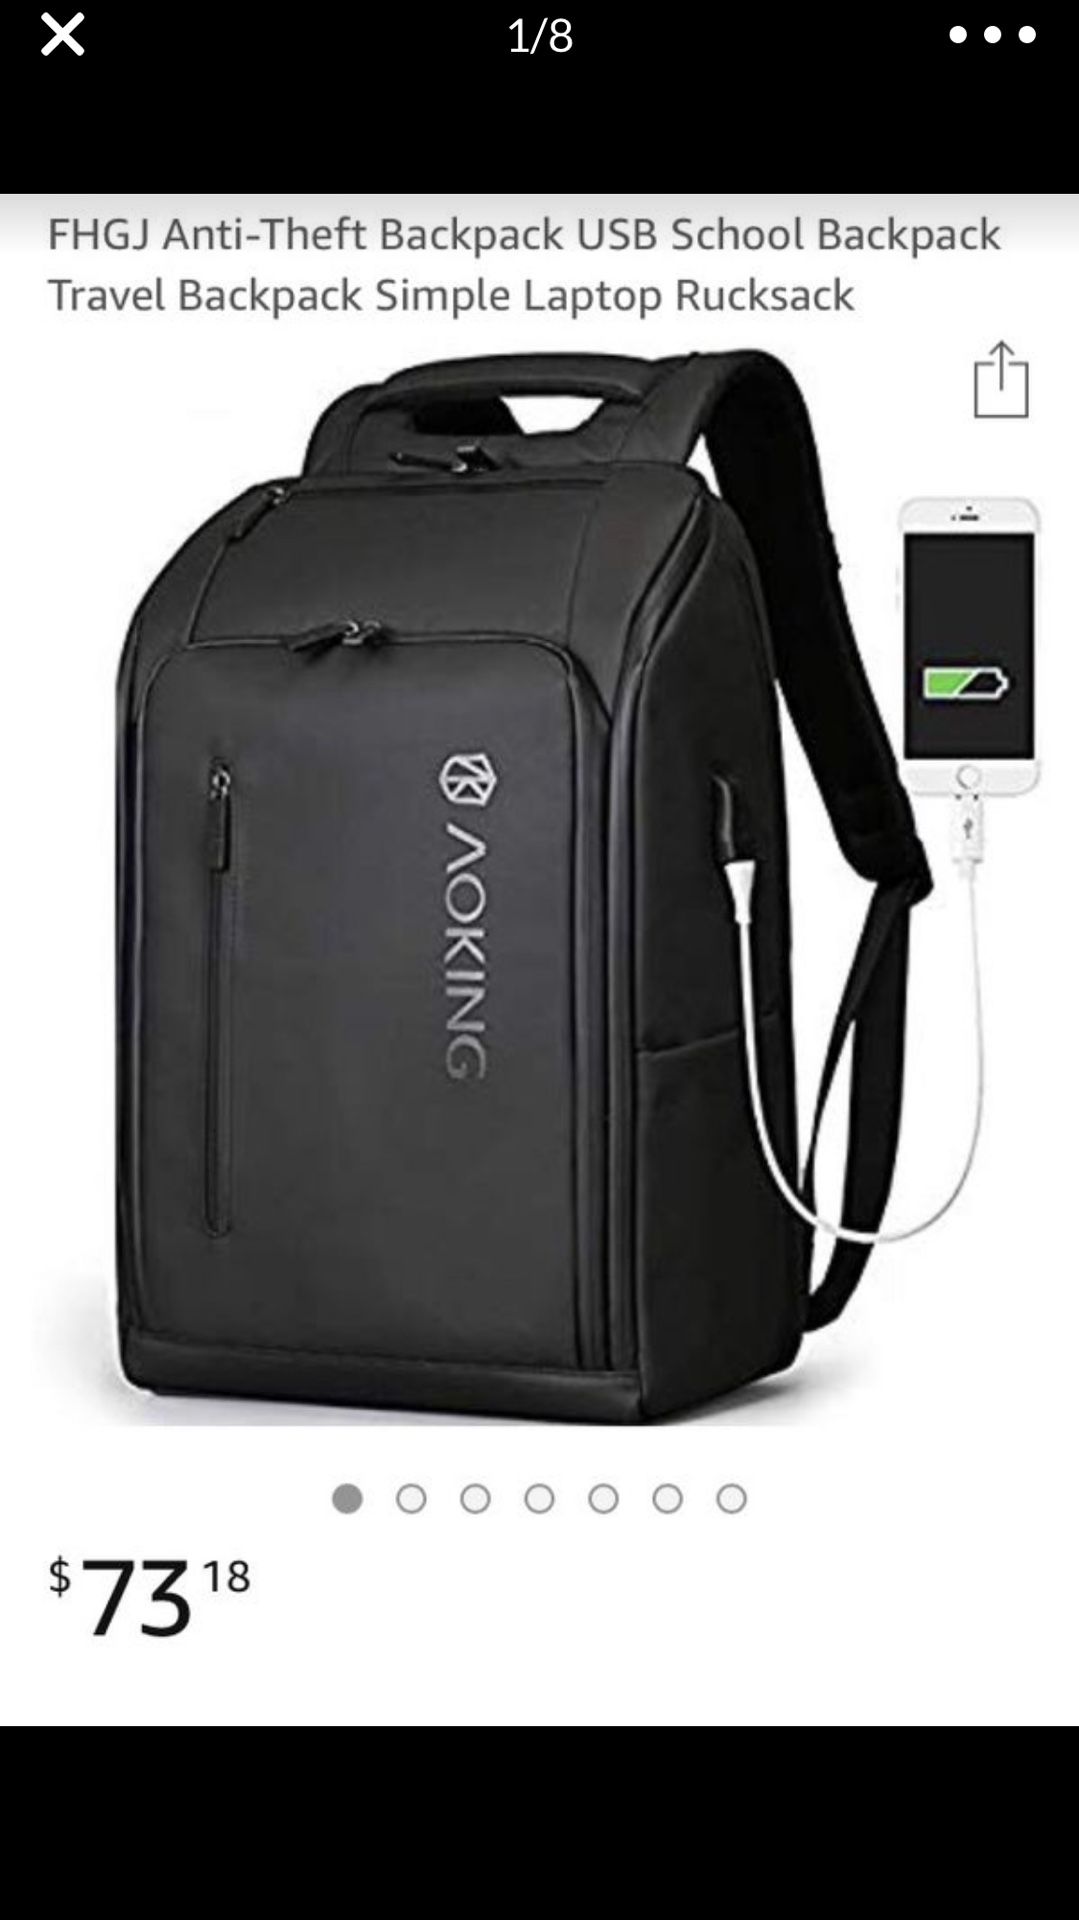 FHGJ Anti-Theft Backpack USB School Backpack Travel Backpack Simple Laptop Rucksack